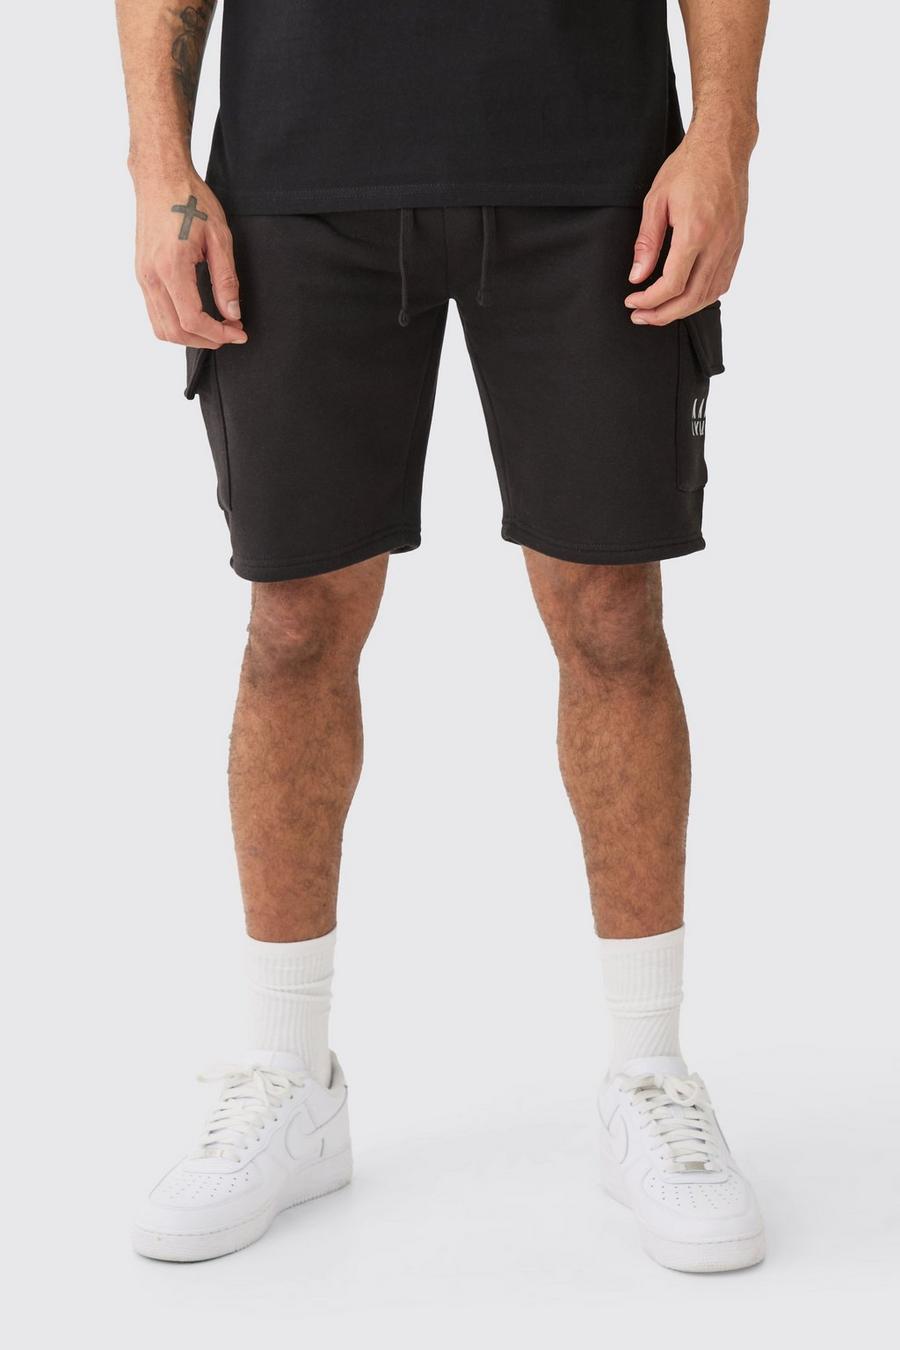 Lockere mittellange Man-Dash Cargo-Shorts, Black